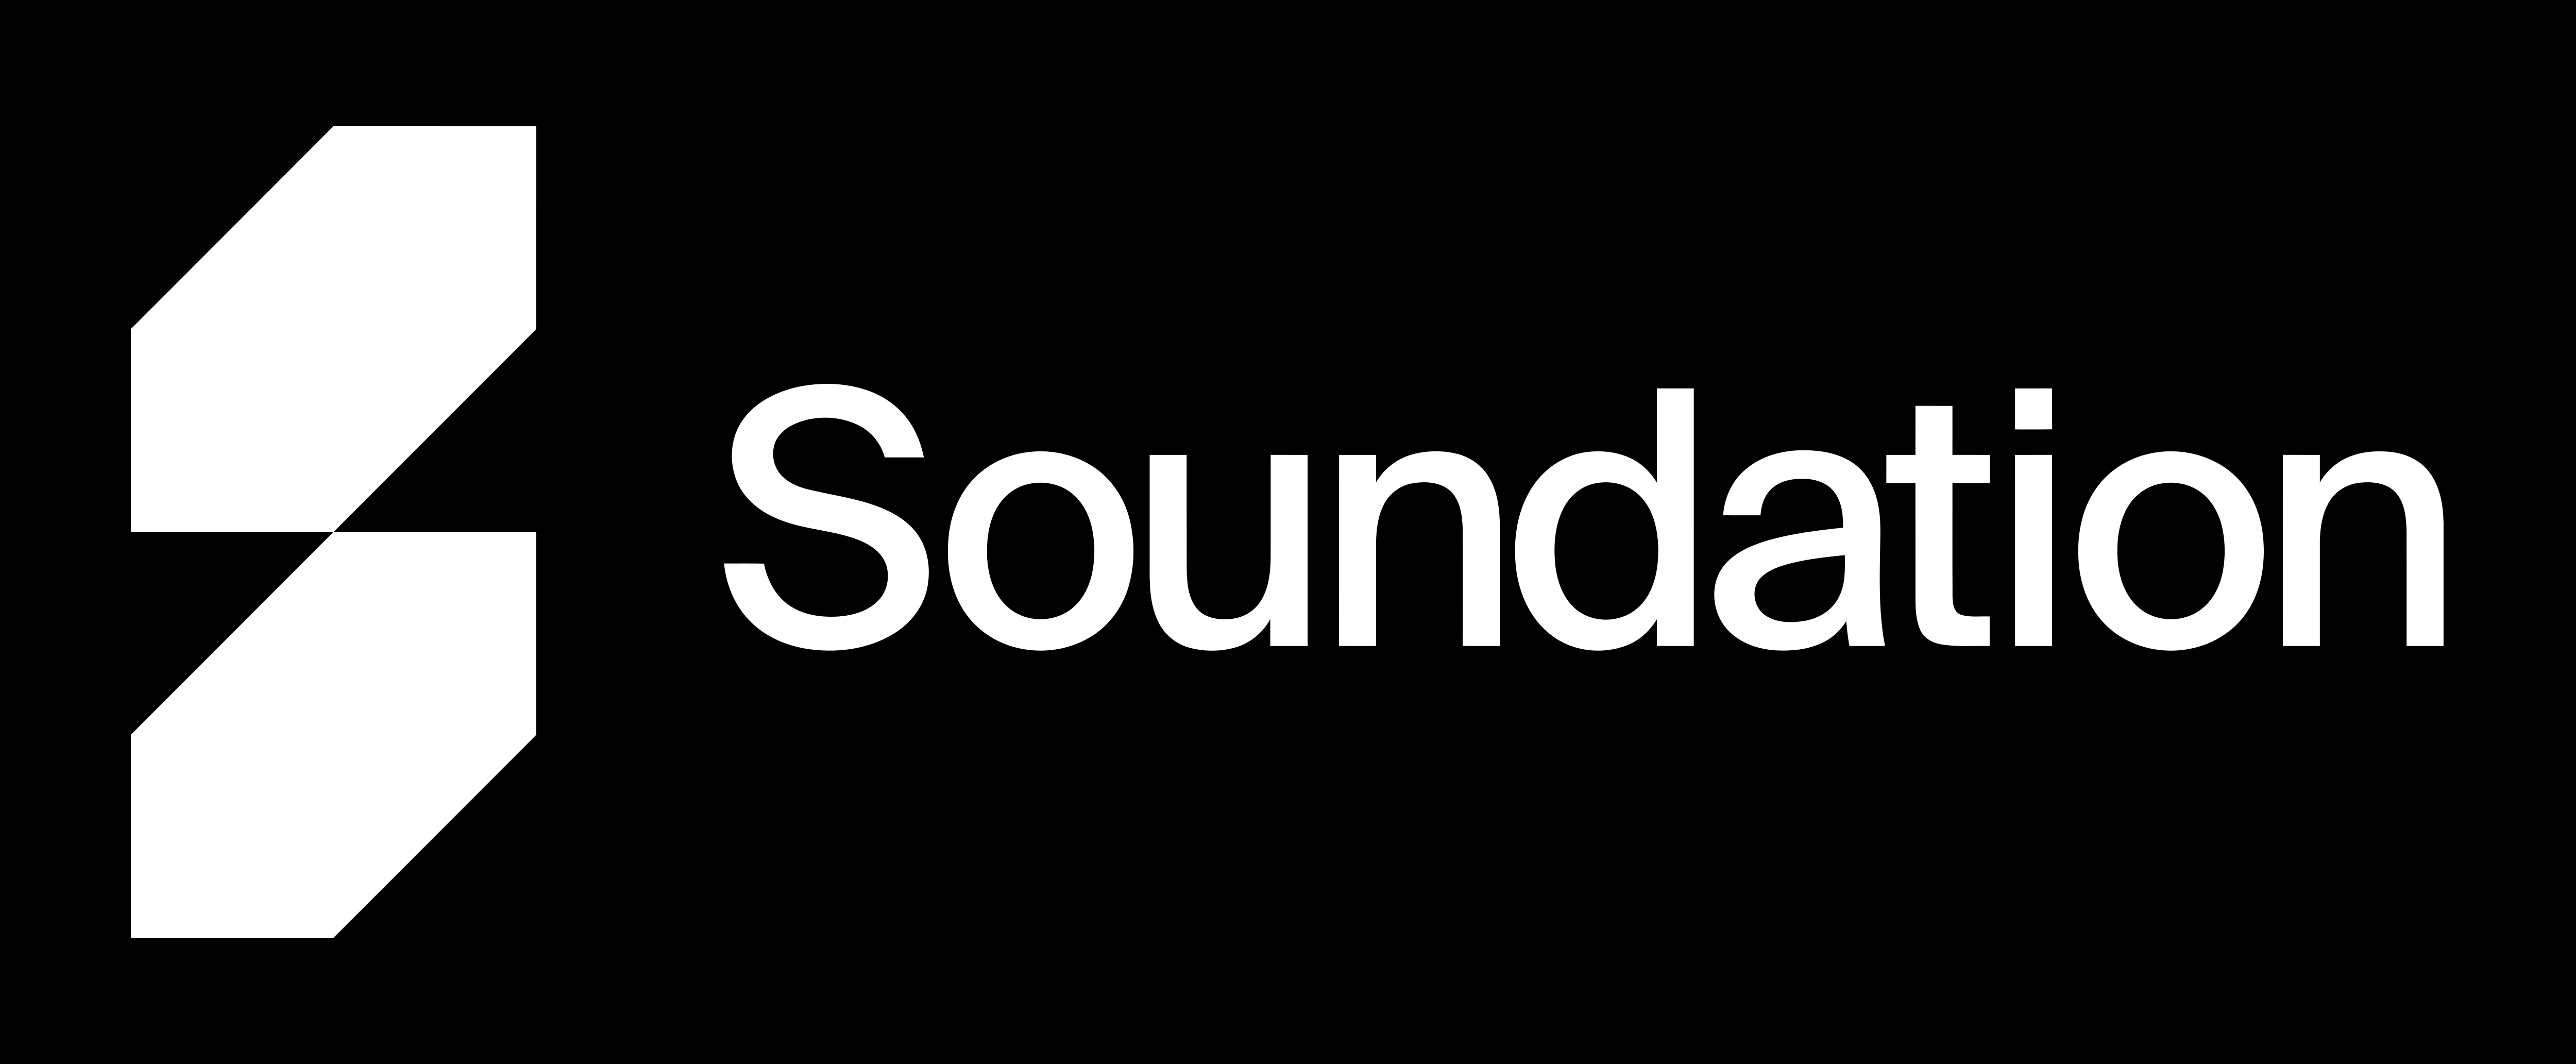 soundation studio download